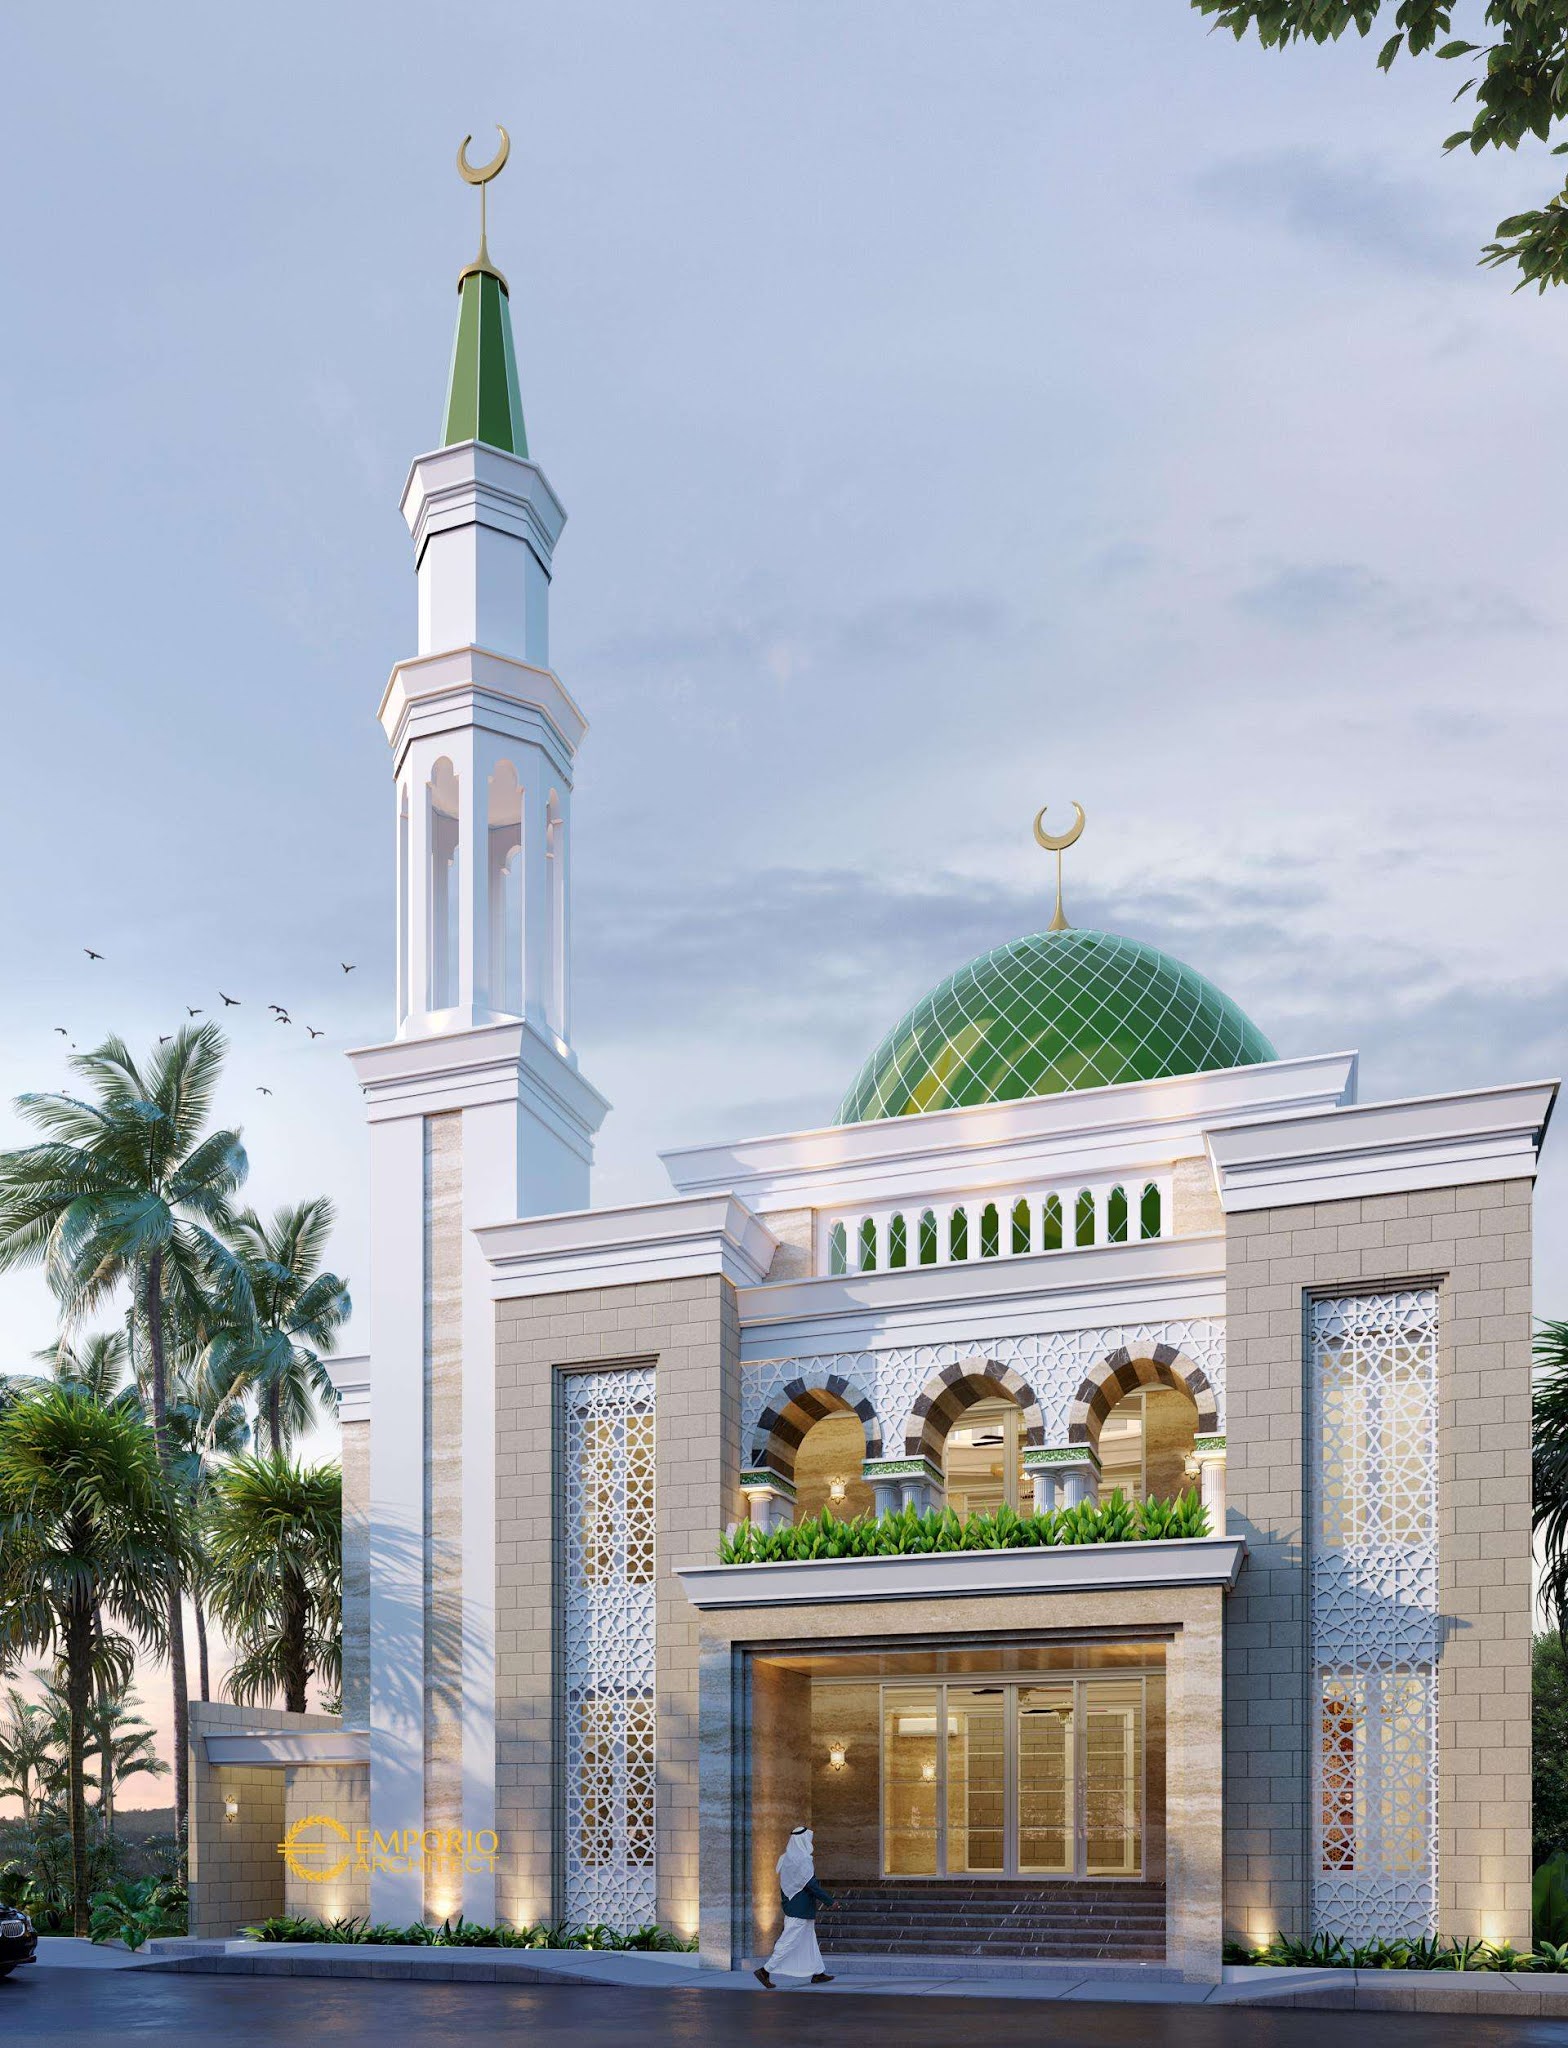 Gambar Masjid, Desain masjid, masjid